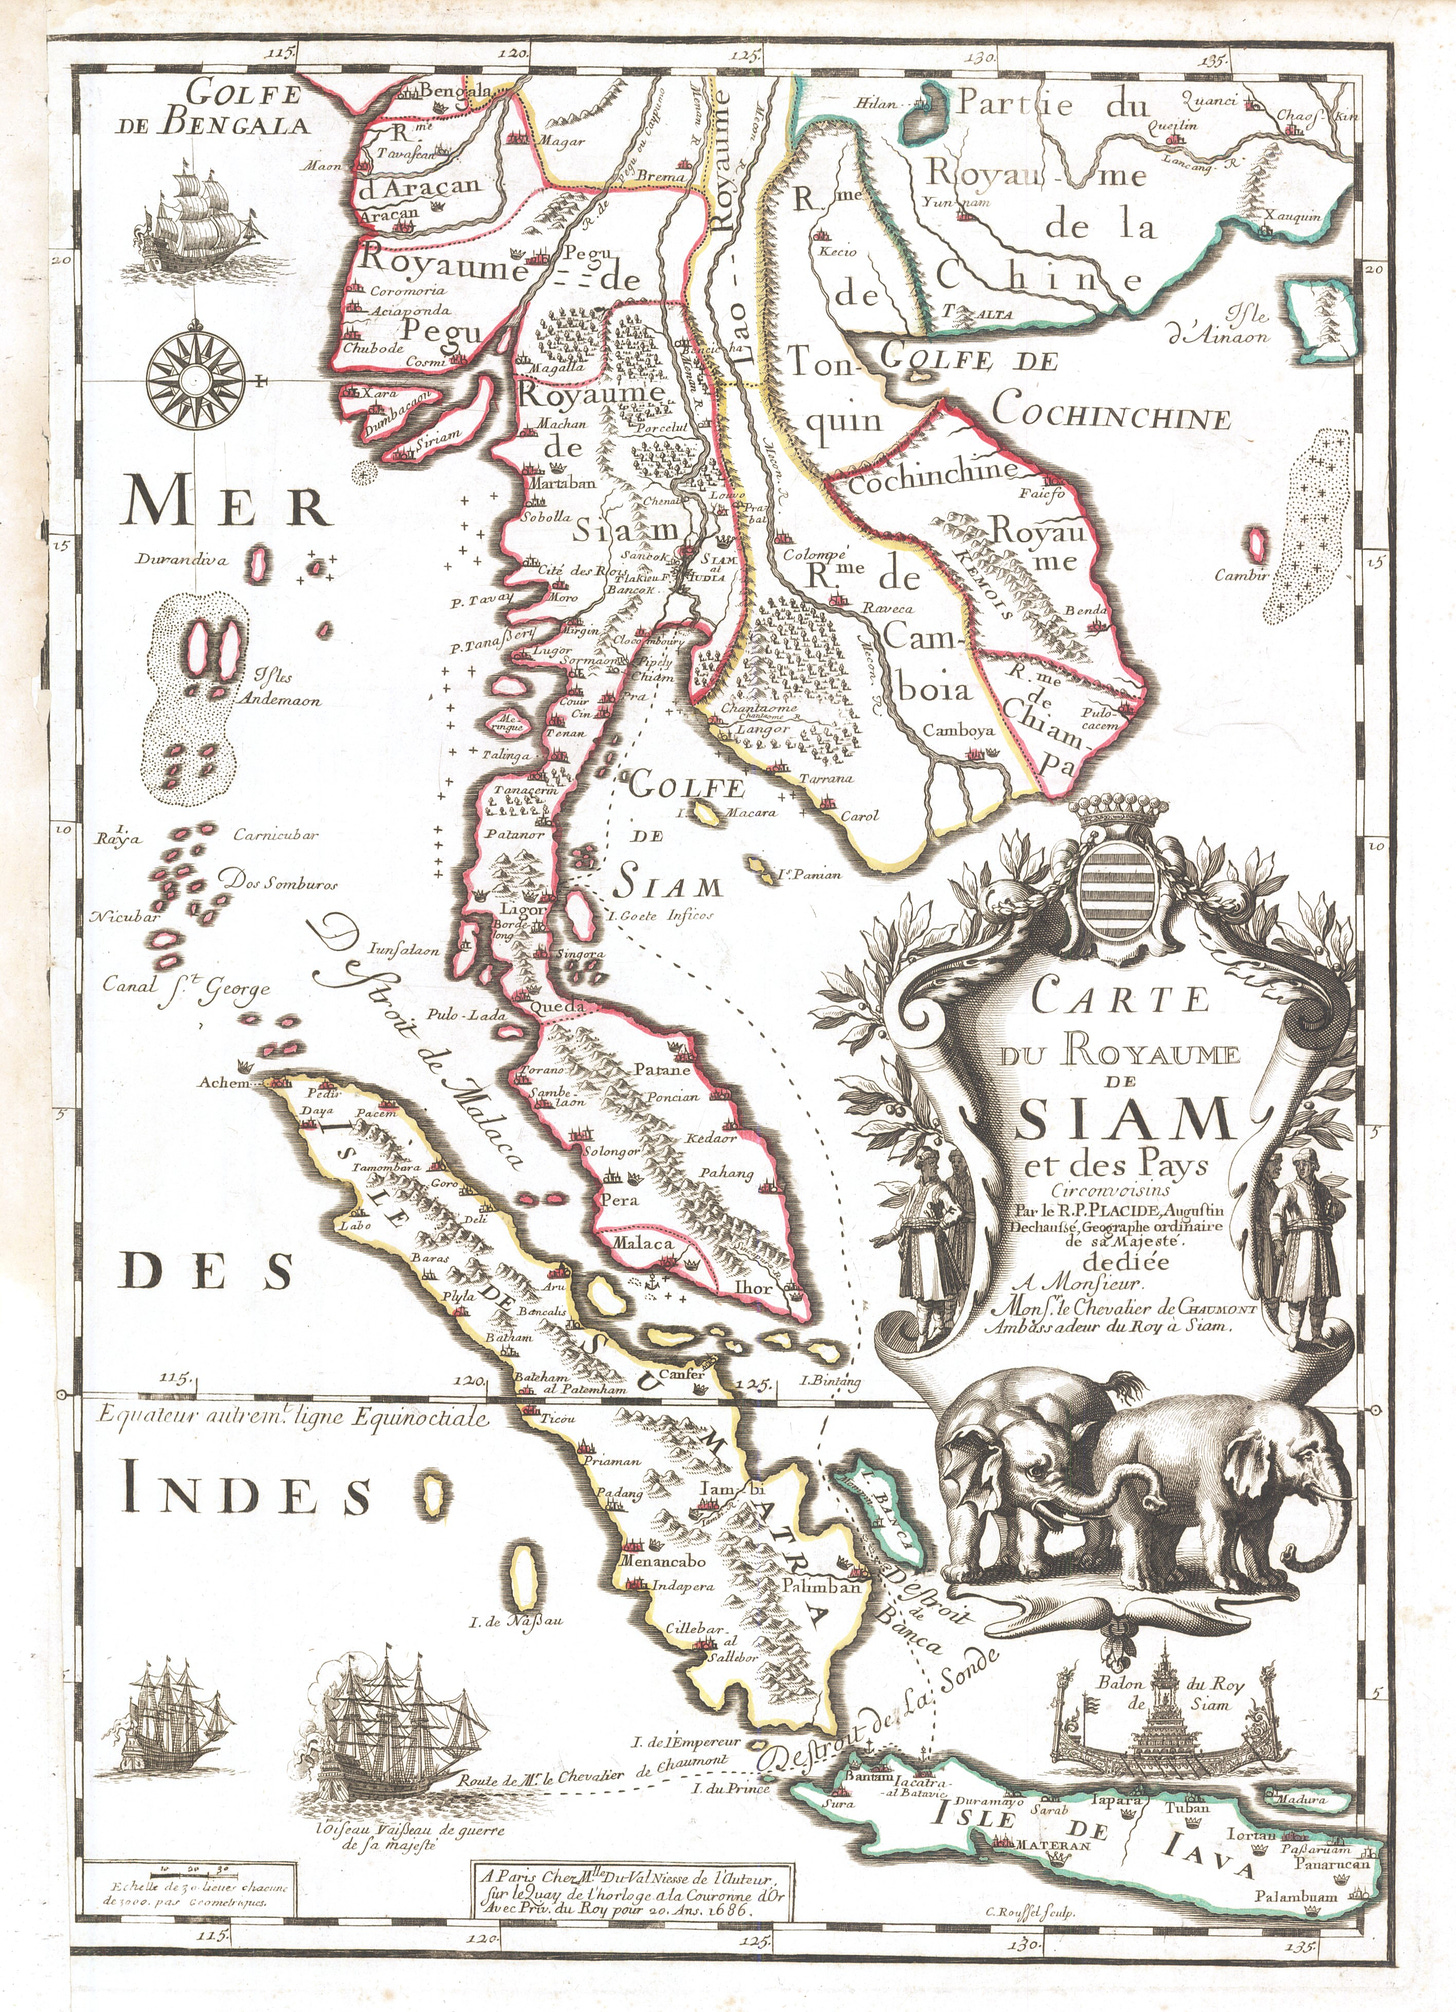 History of Thailand - Wikipedia